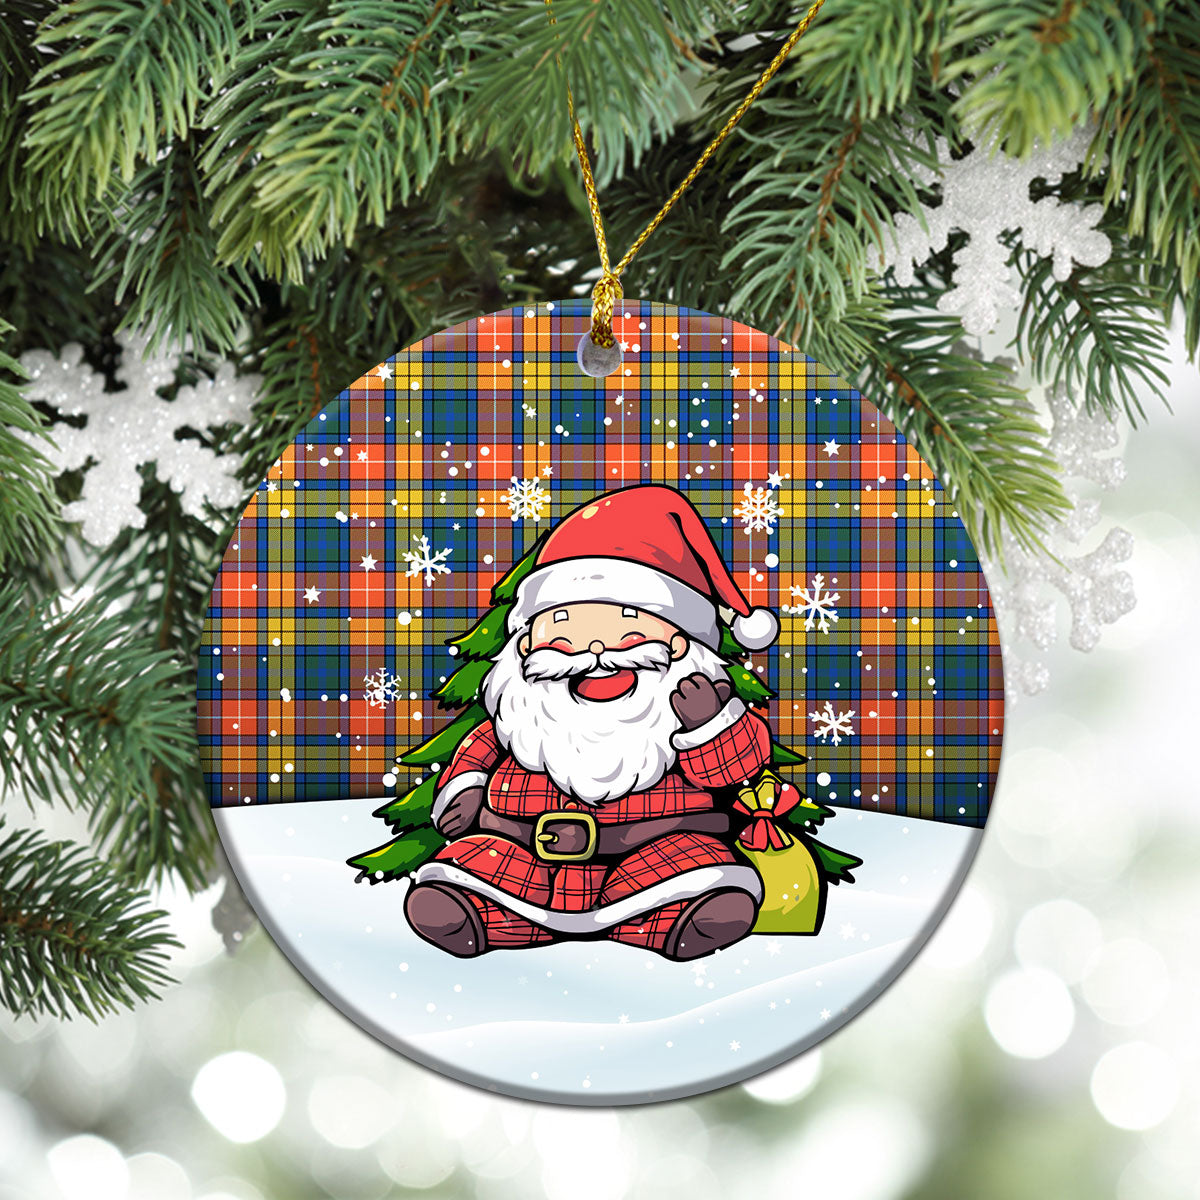 Buchanan Ancient Tartan Christmas Ceramic Ornament - Scottish Santa Style